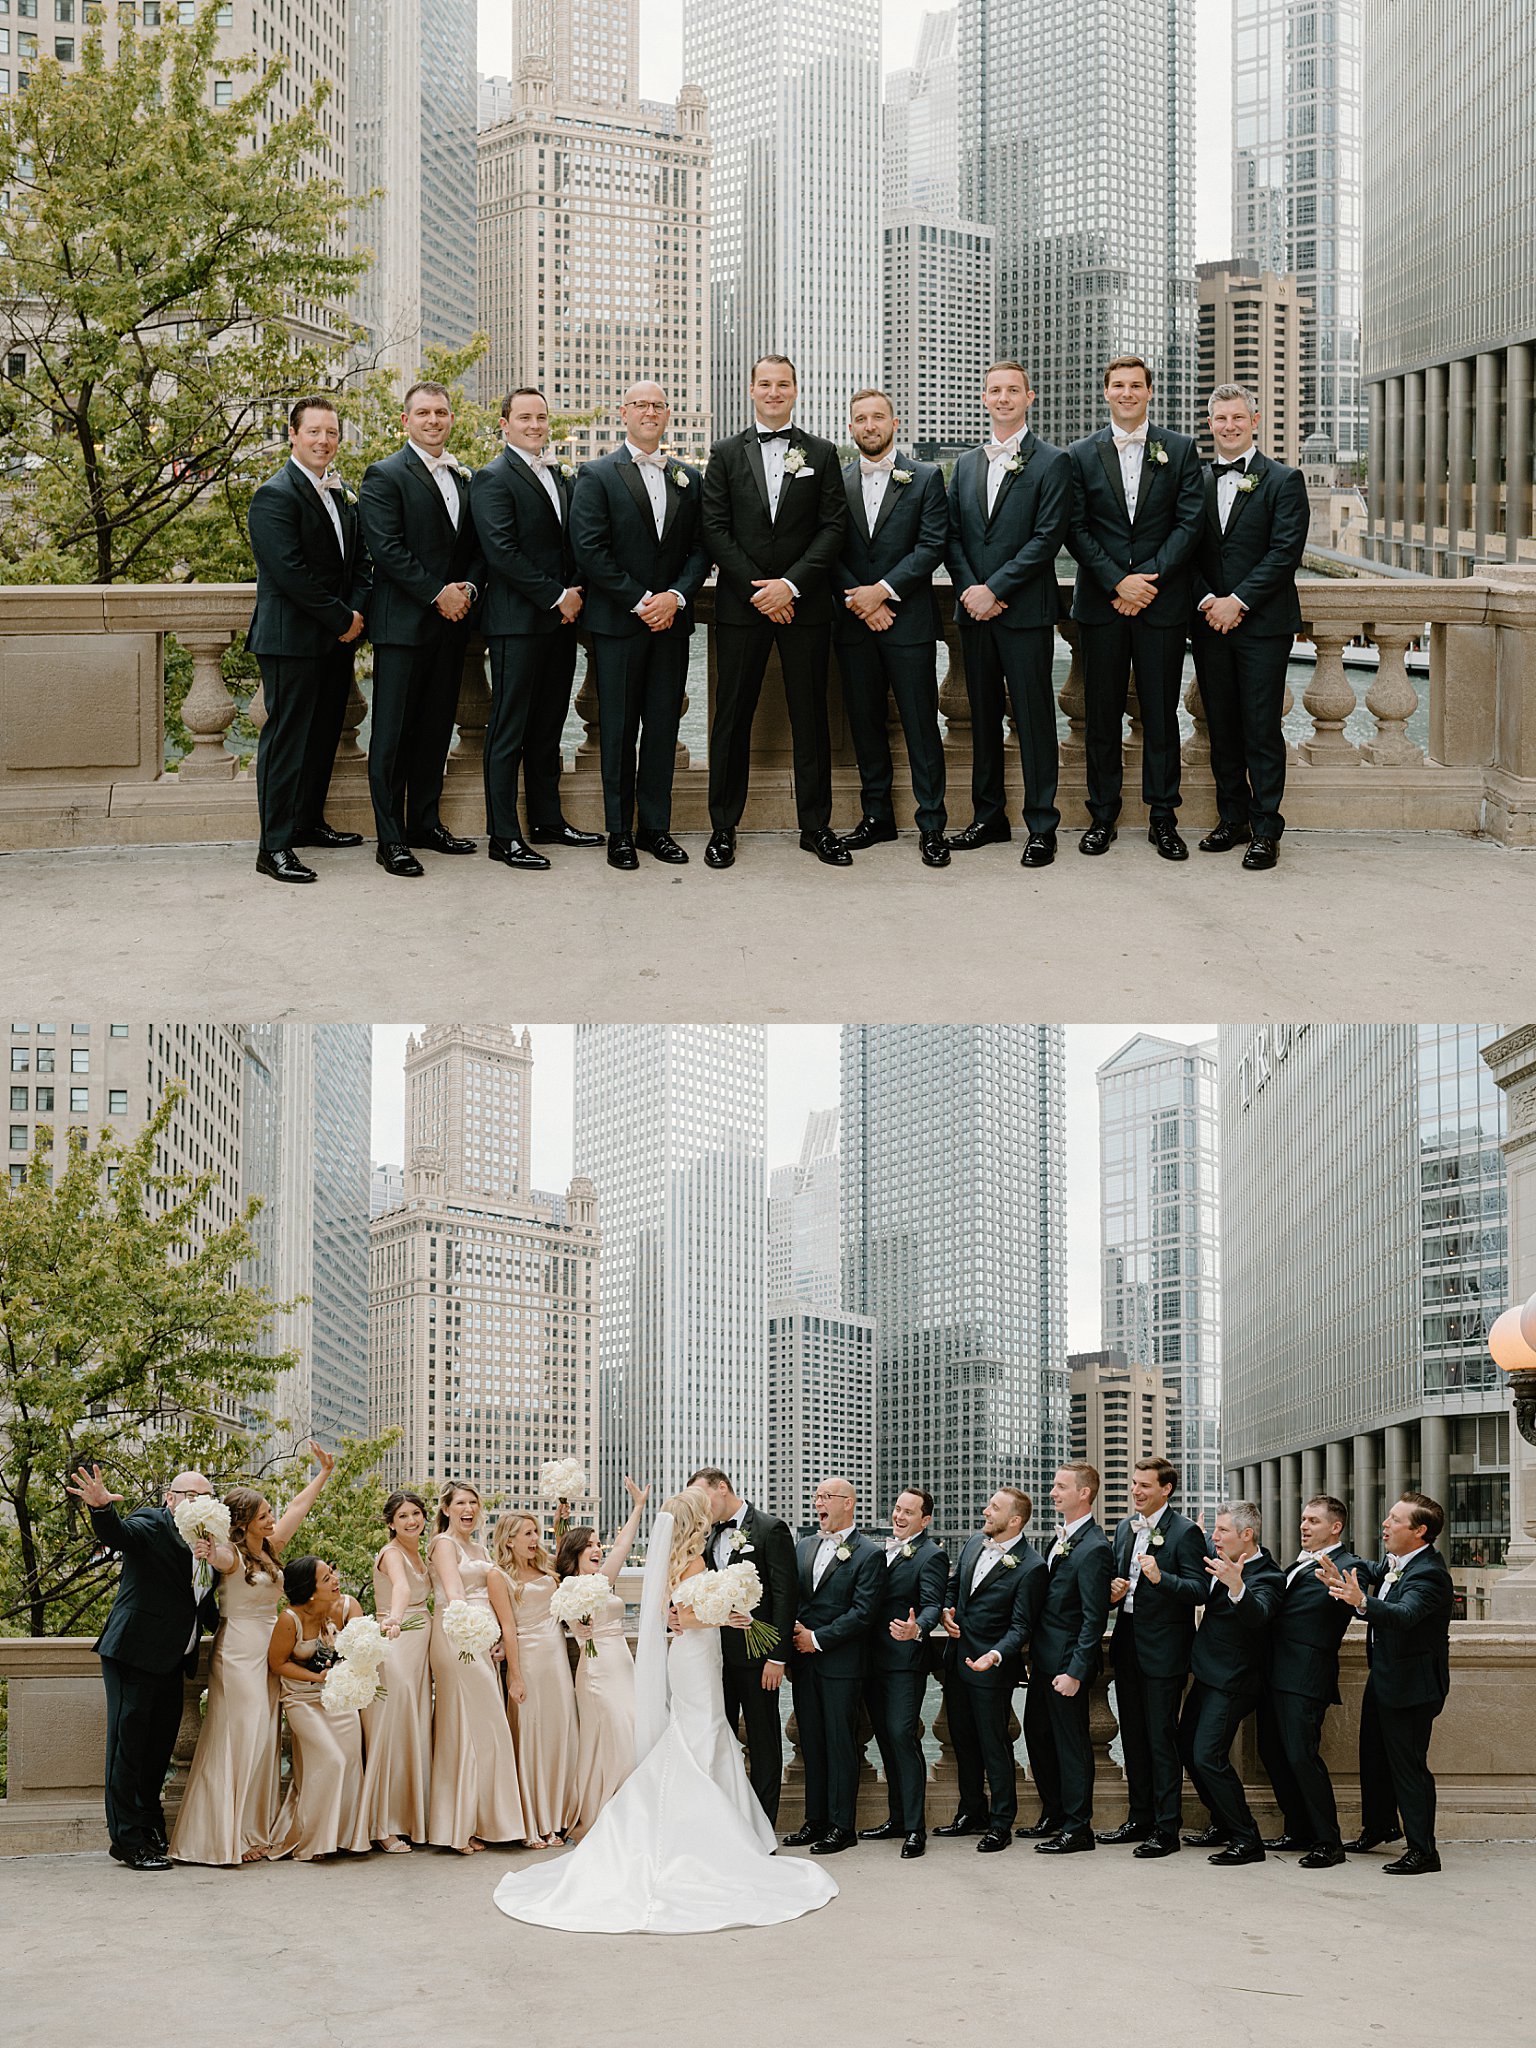 bridal party gathers to celebrate above the Chicago river before romantic Galleria Marchetti ceremony